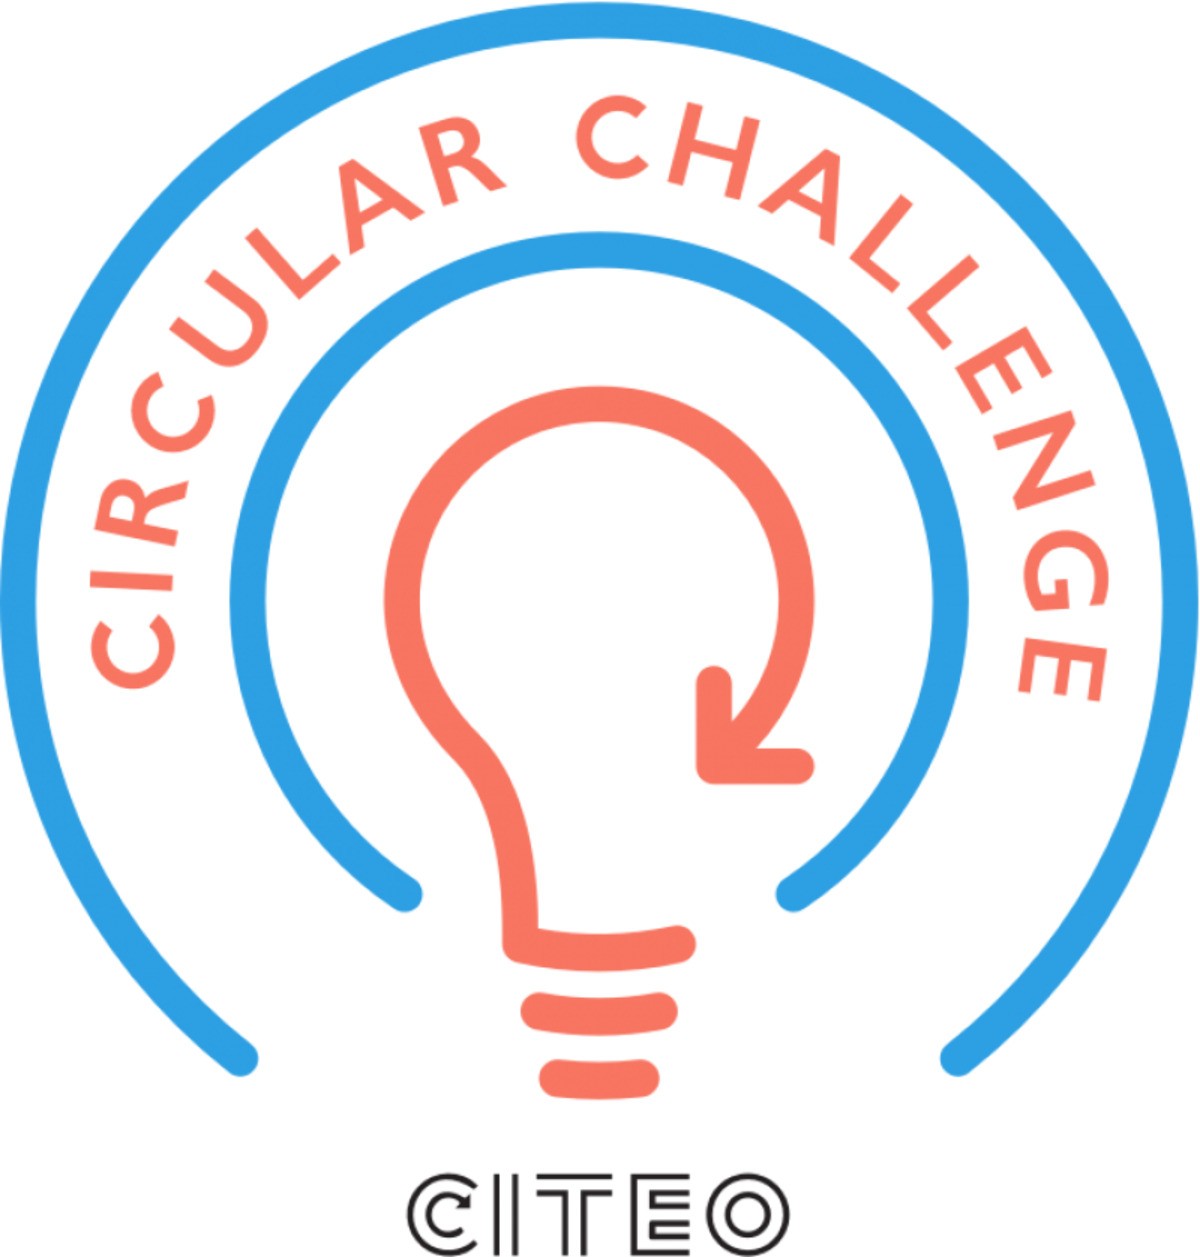 Circular Challenge